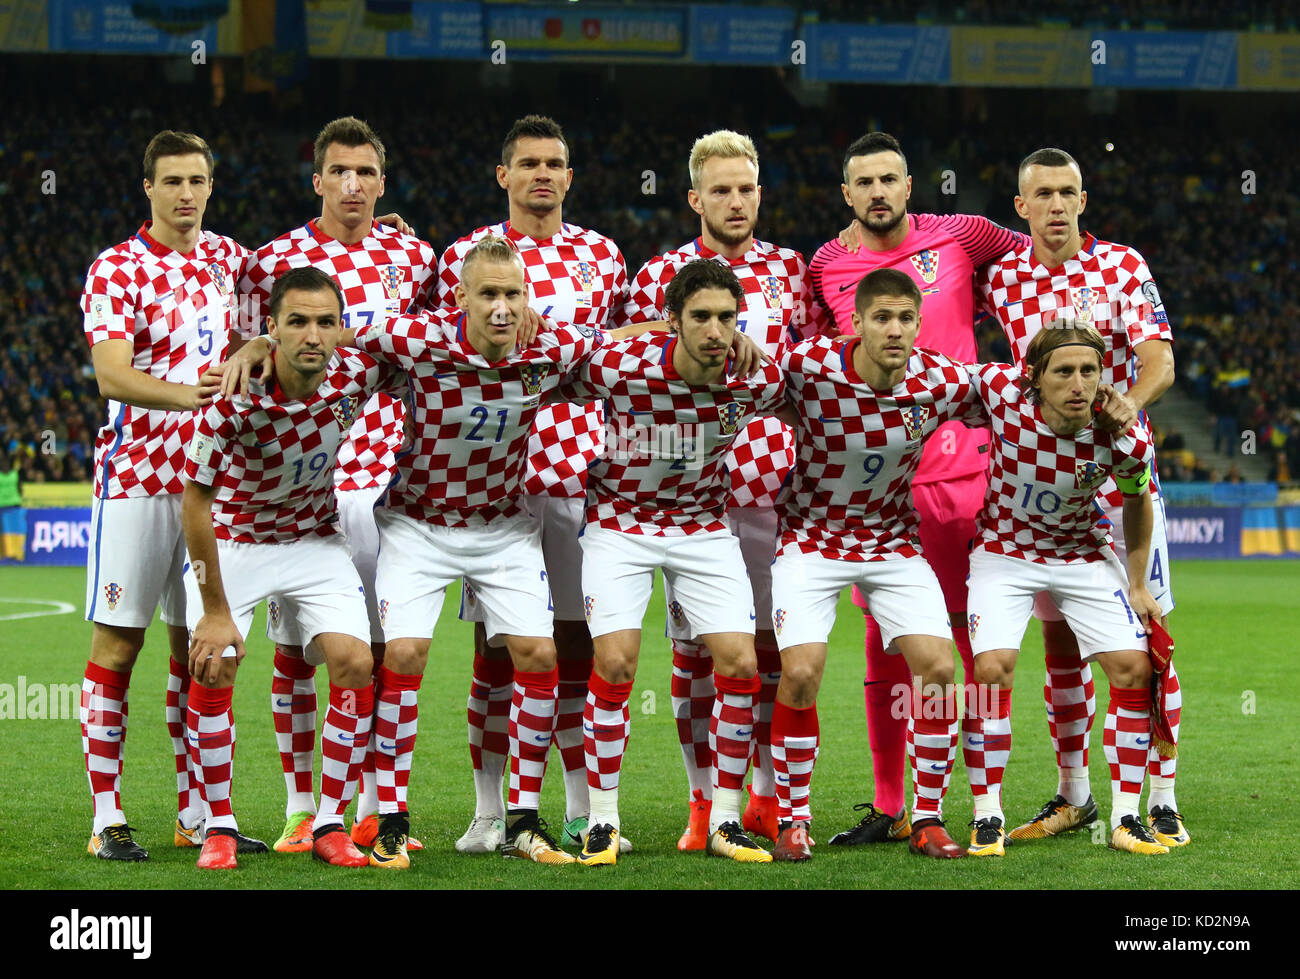 Team croatia national Croatia's national